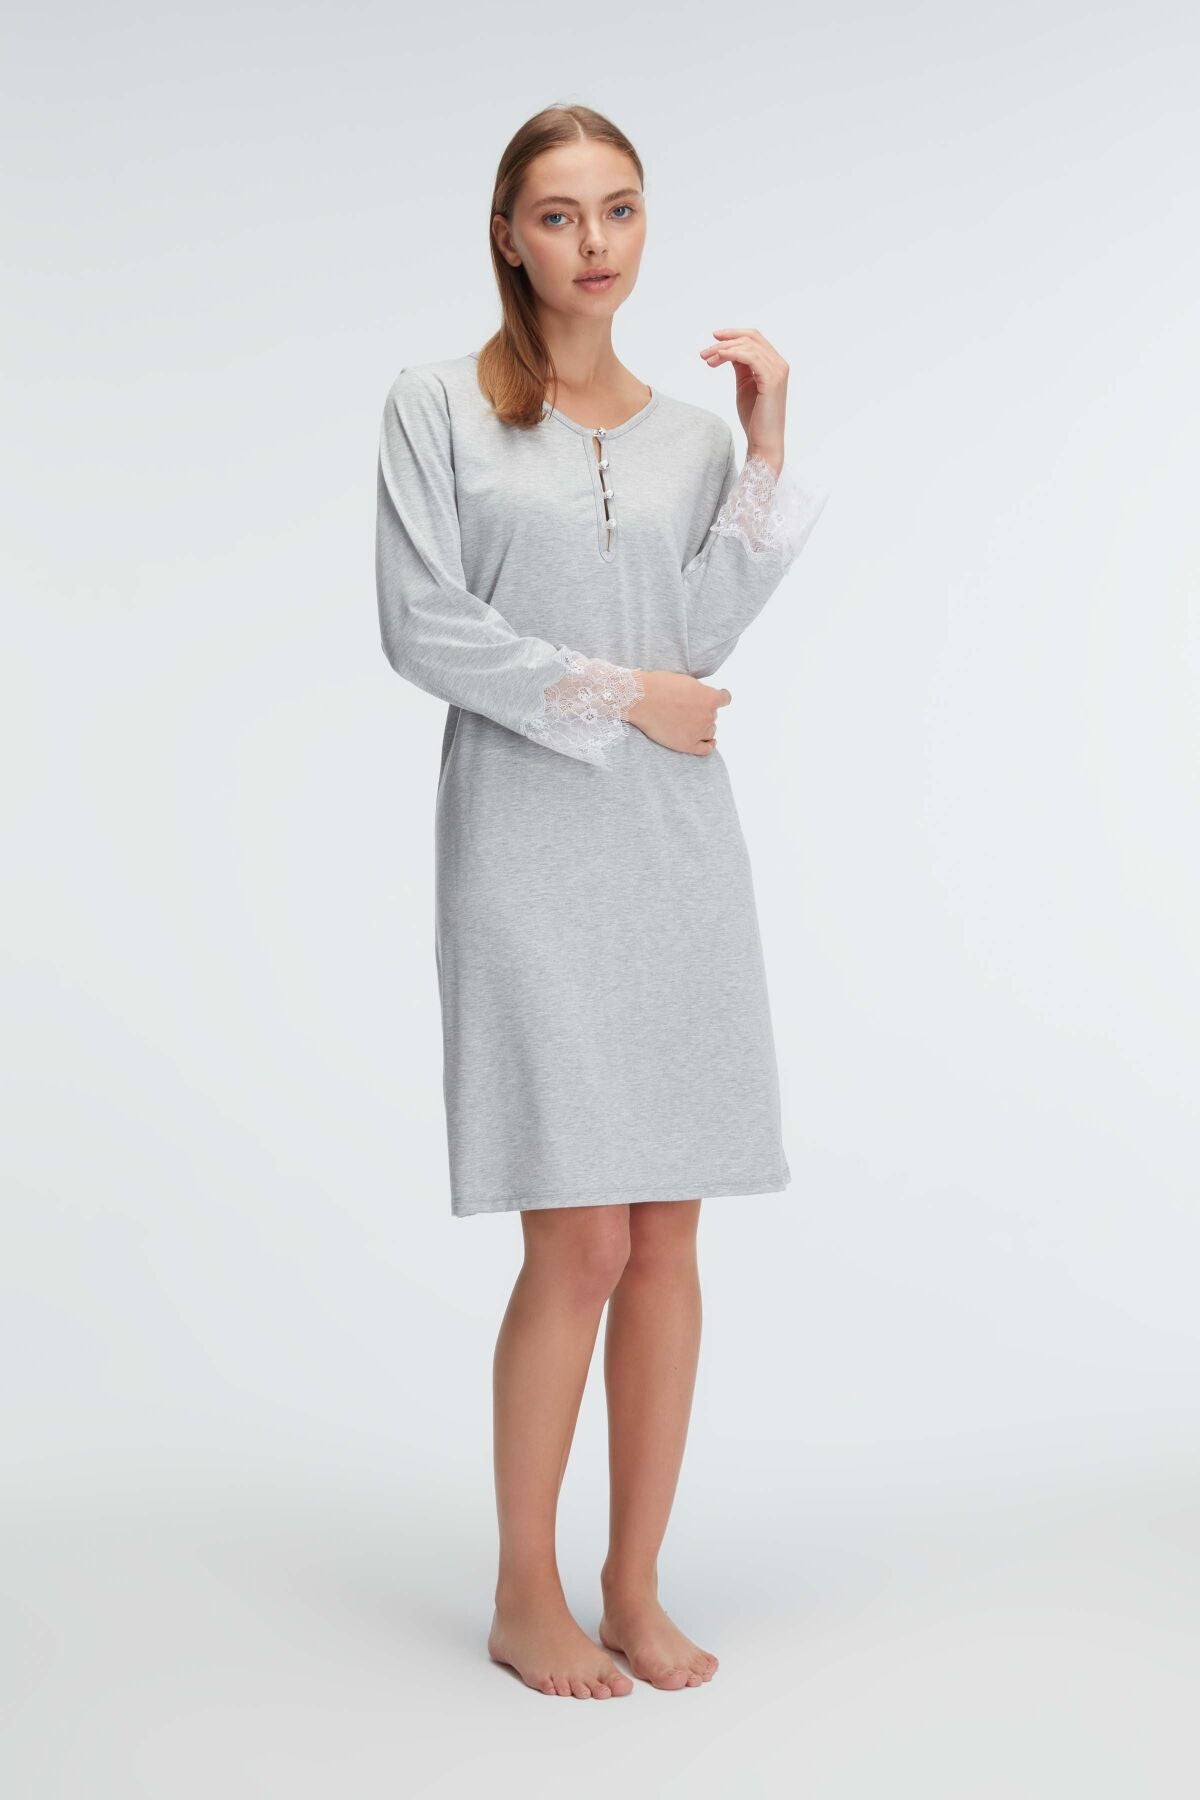 Shopymommy 11312 Lace Sleeve Maternity & Nursing Nightgown Grey